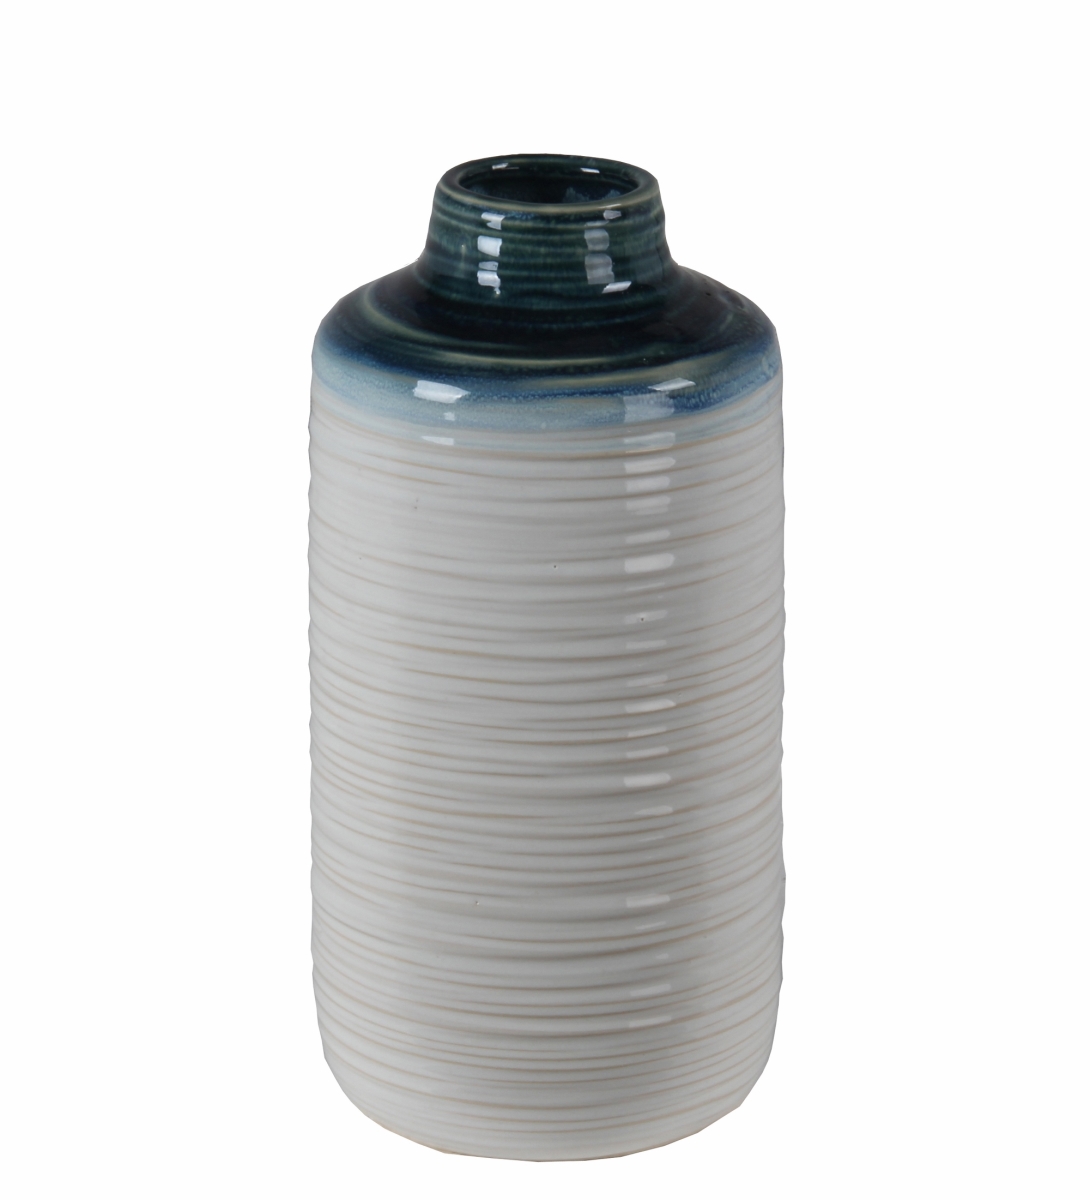 78176 Ceramic Vase, White - Large